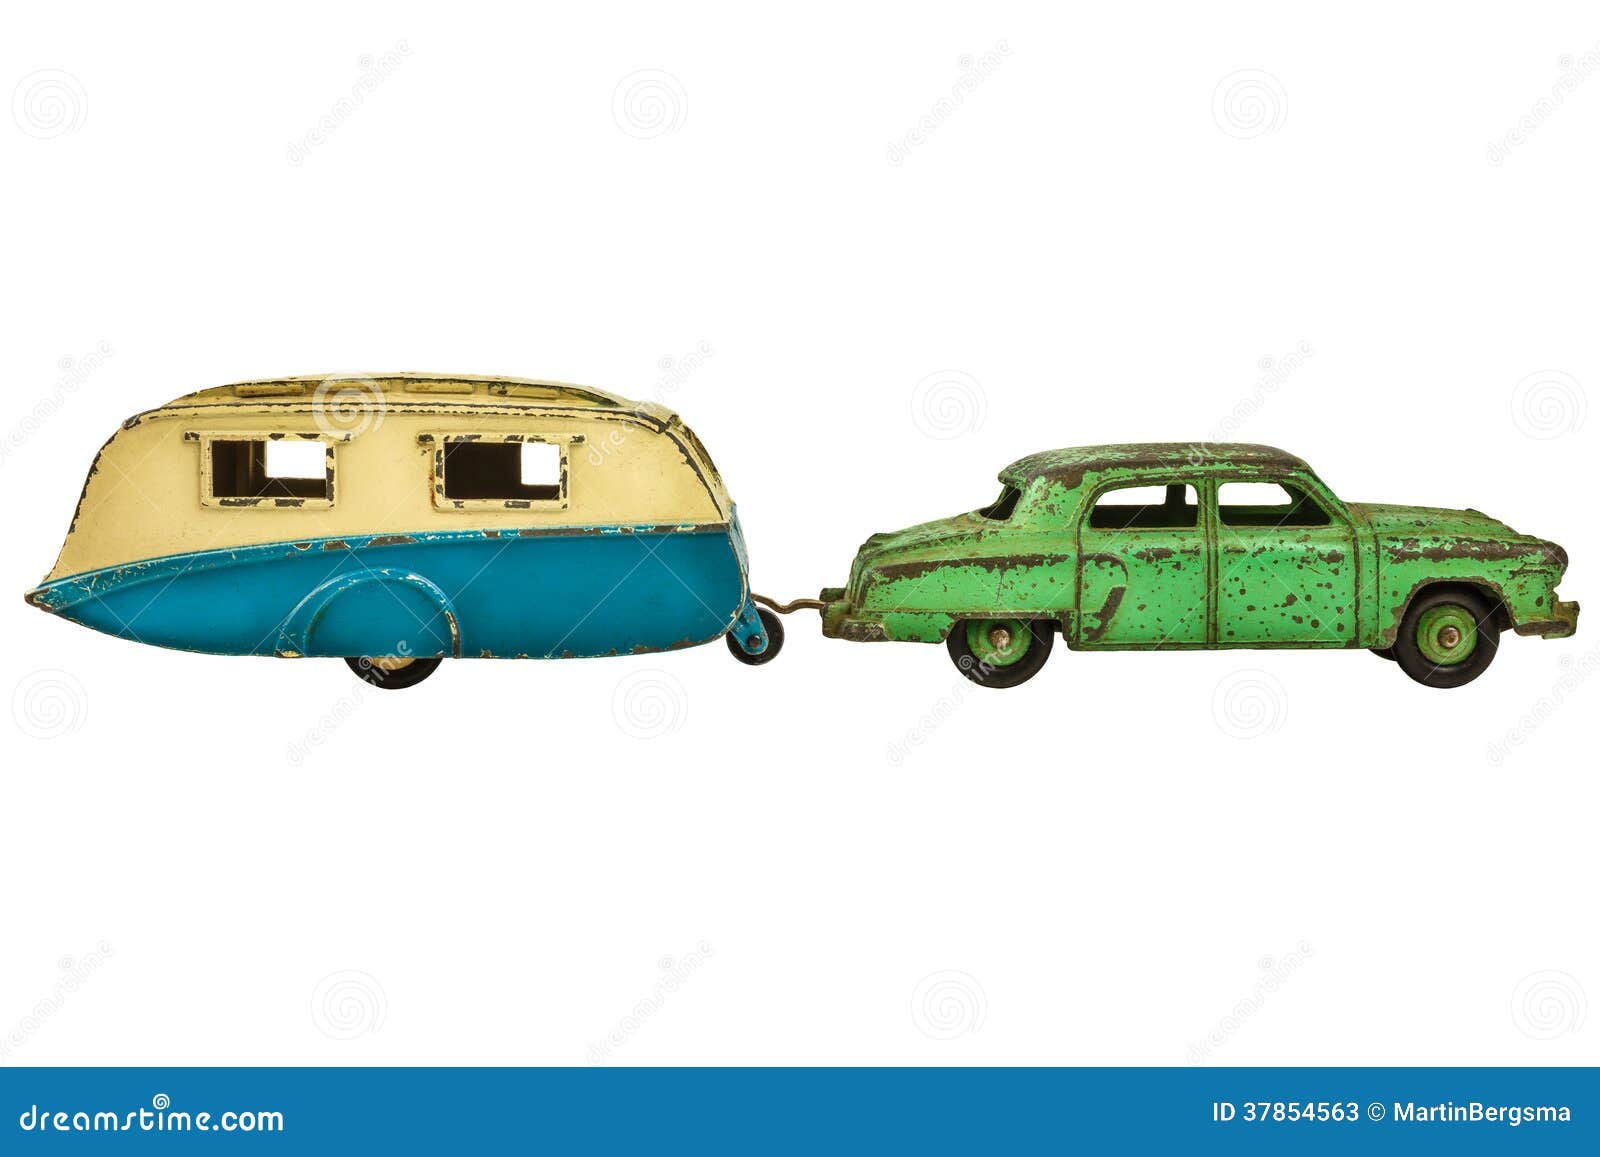 car and caravan clipart - photo #42